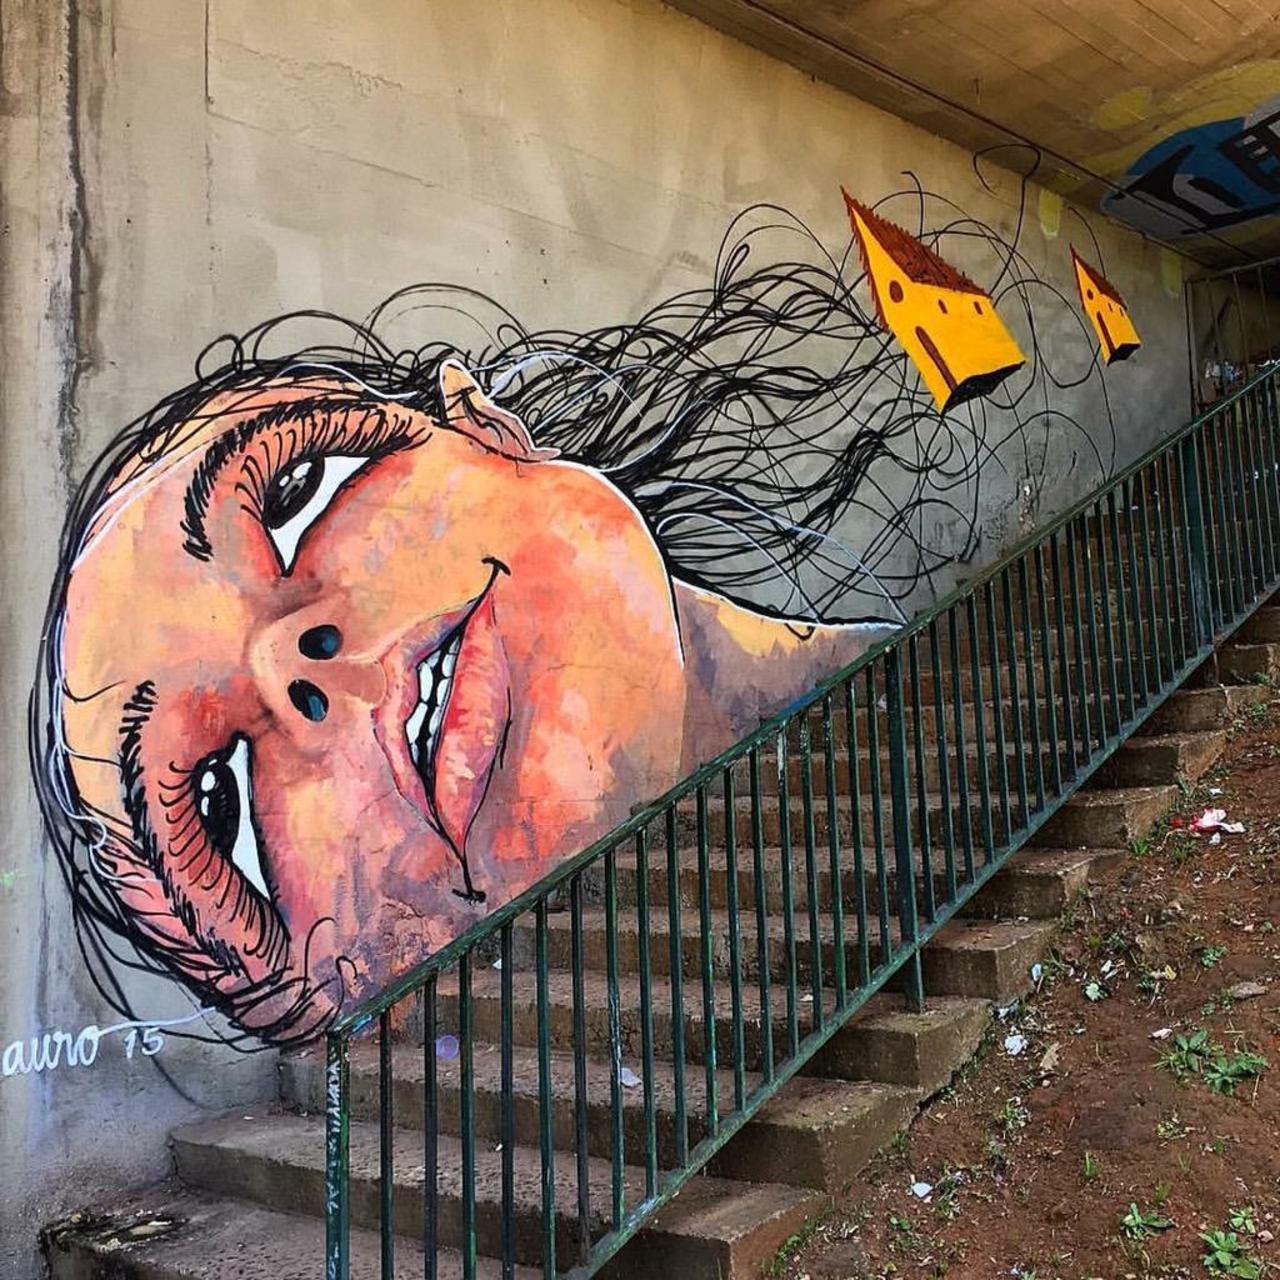 RT @GoogleStreetArt: Street Art by Reveracidade in São Paulo 

#art #graffiti #mural #streetart http://t.co/9MY1PxBXAi